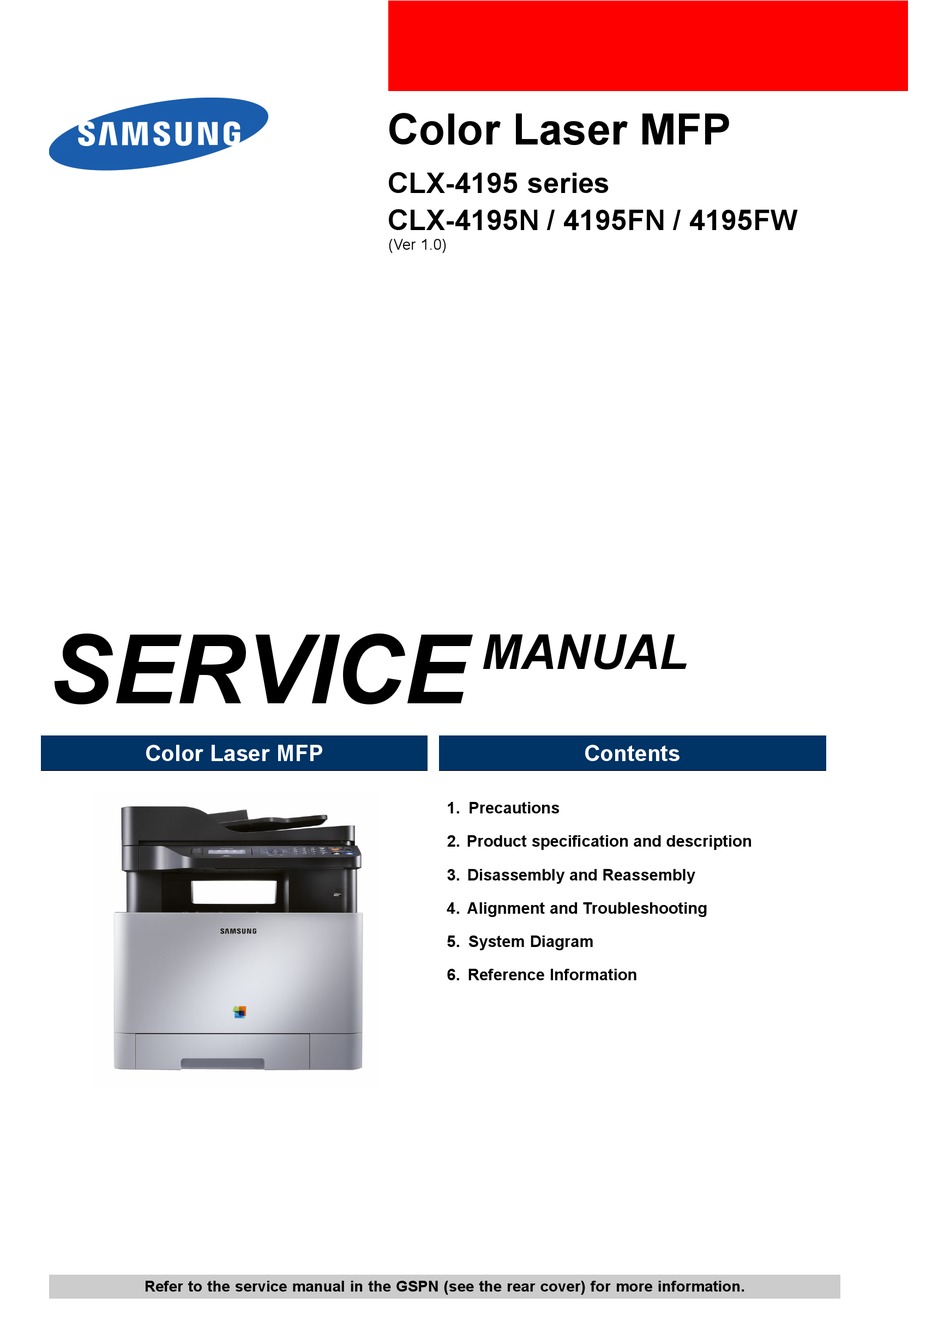 SAMSUNG CLX-4195N SERVICE MANUAL Pdf Download | ManualsLib